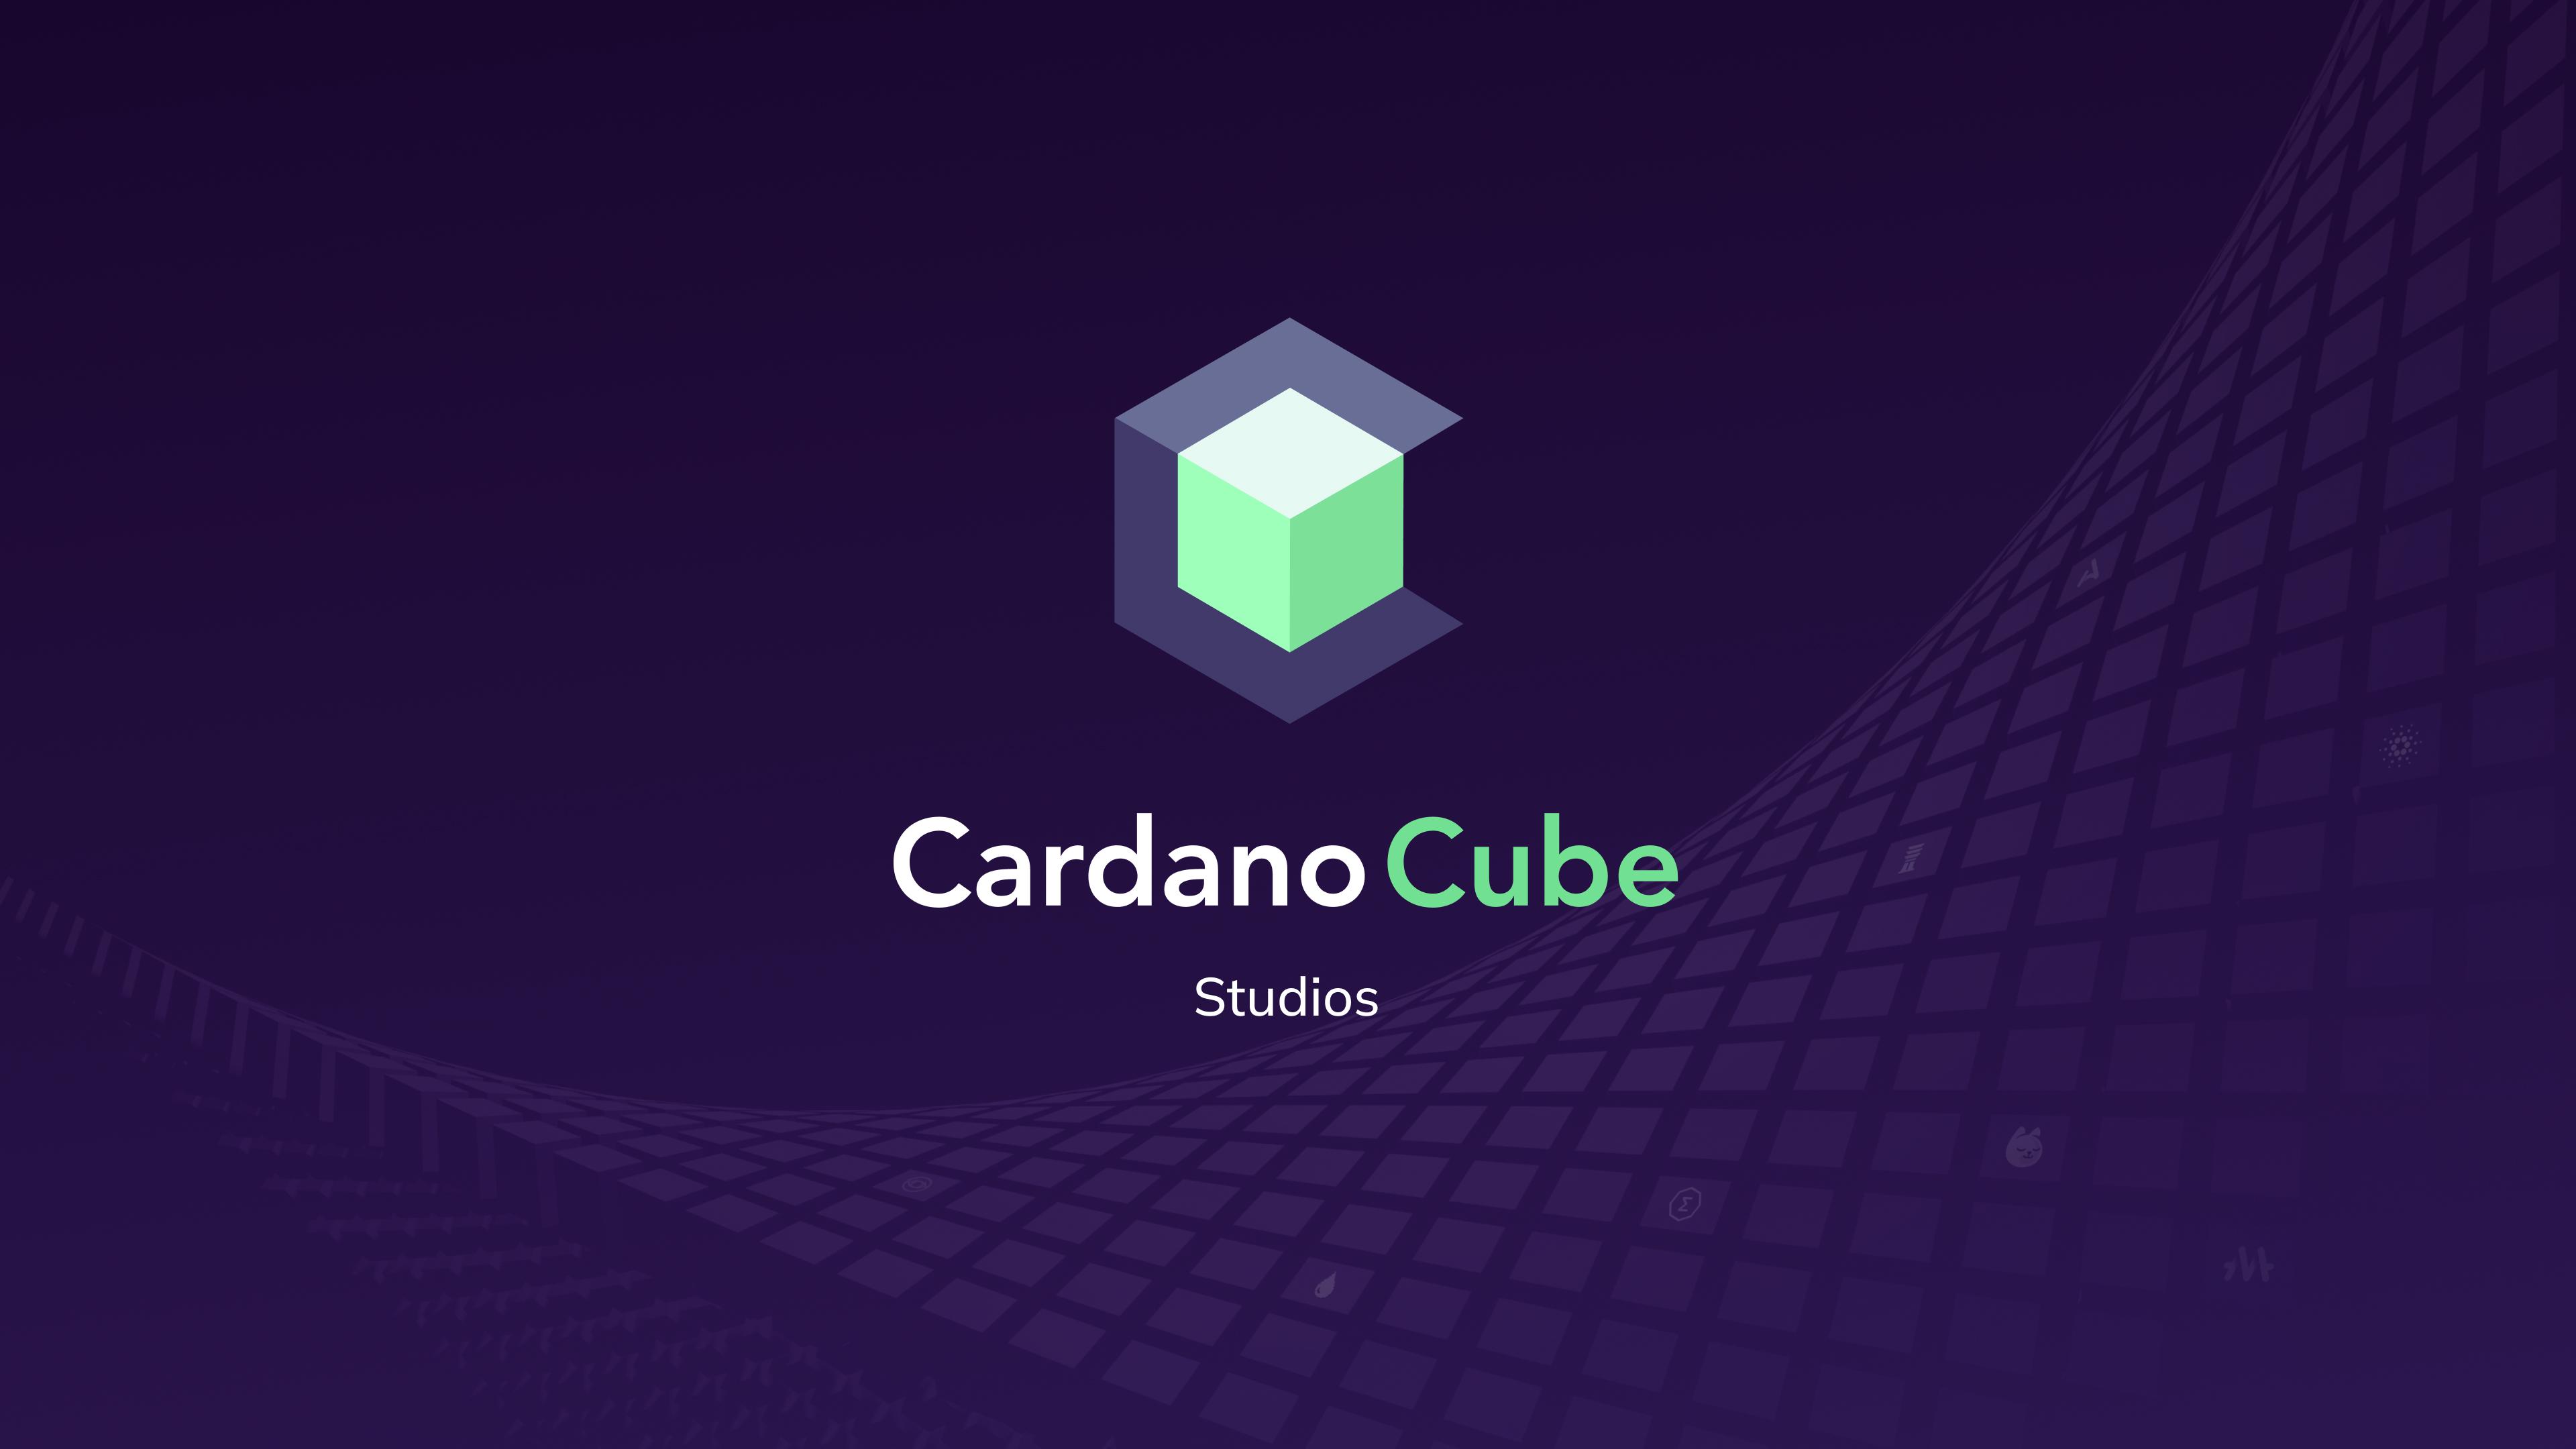 Cardano-Cube-Studios-9969fb.jpg